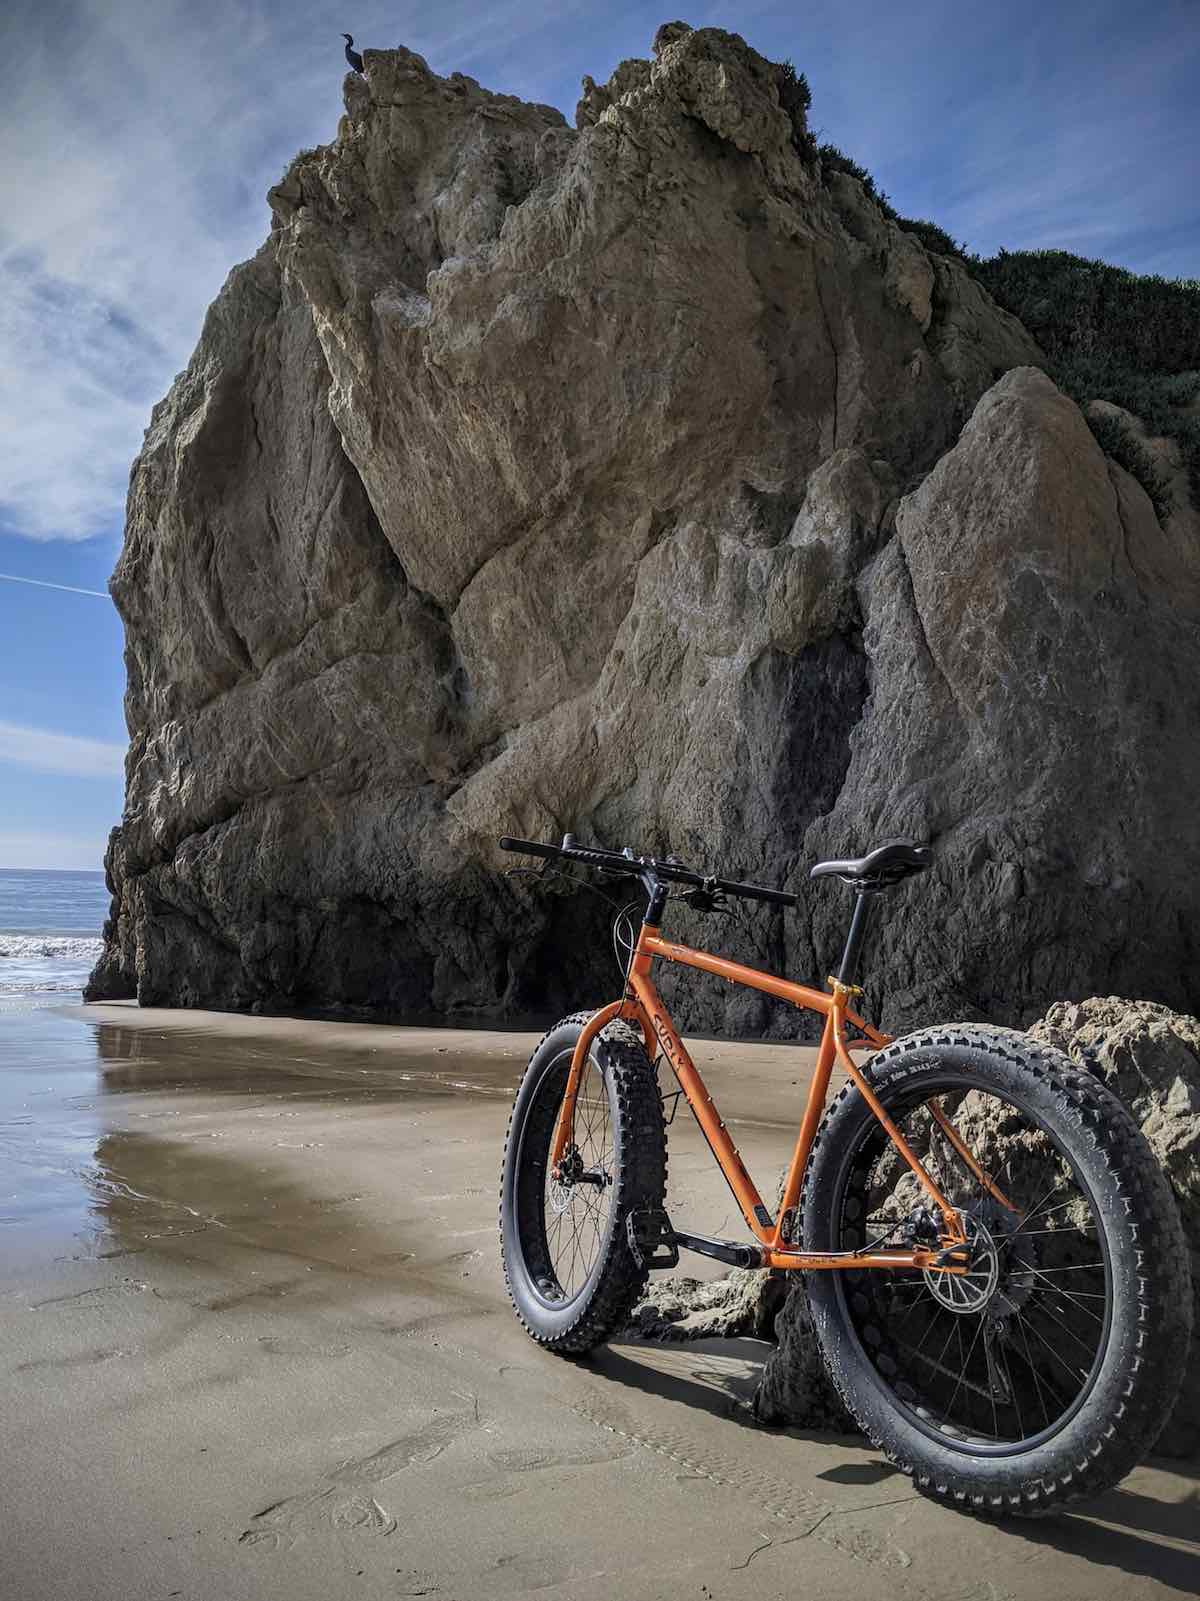 bikerumor pic of the day surly fat bike on el matador state beach in malibu california bike on the beach under a large rock